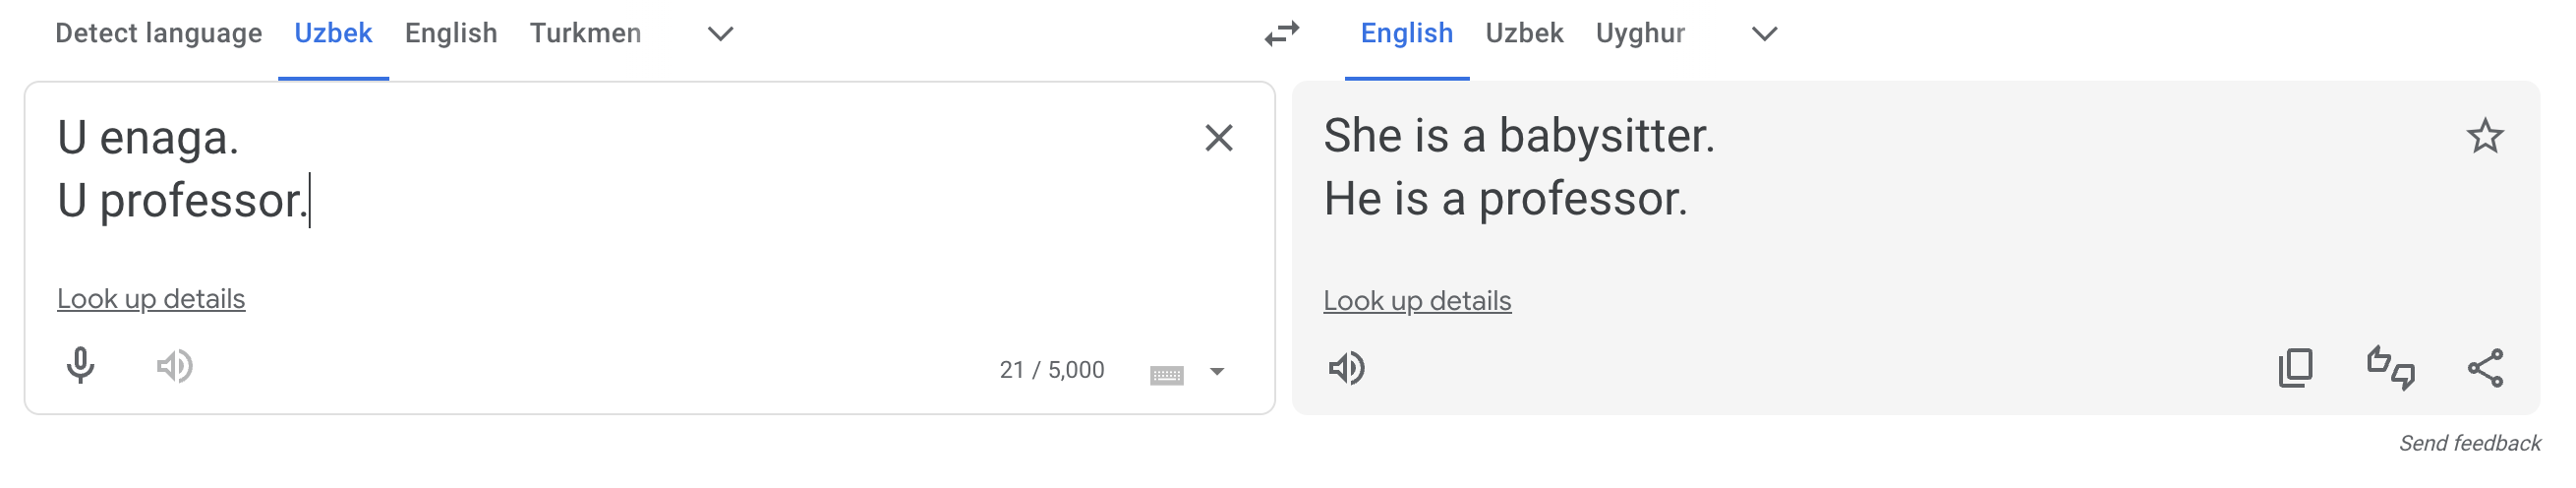 Uzbek pronouns